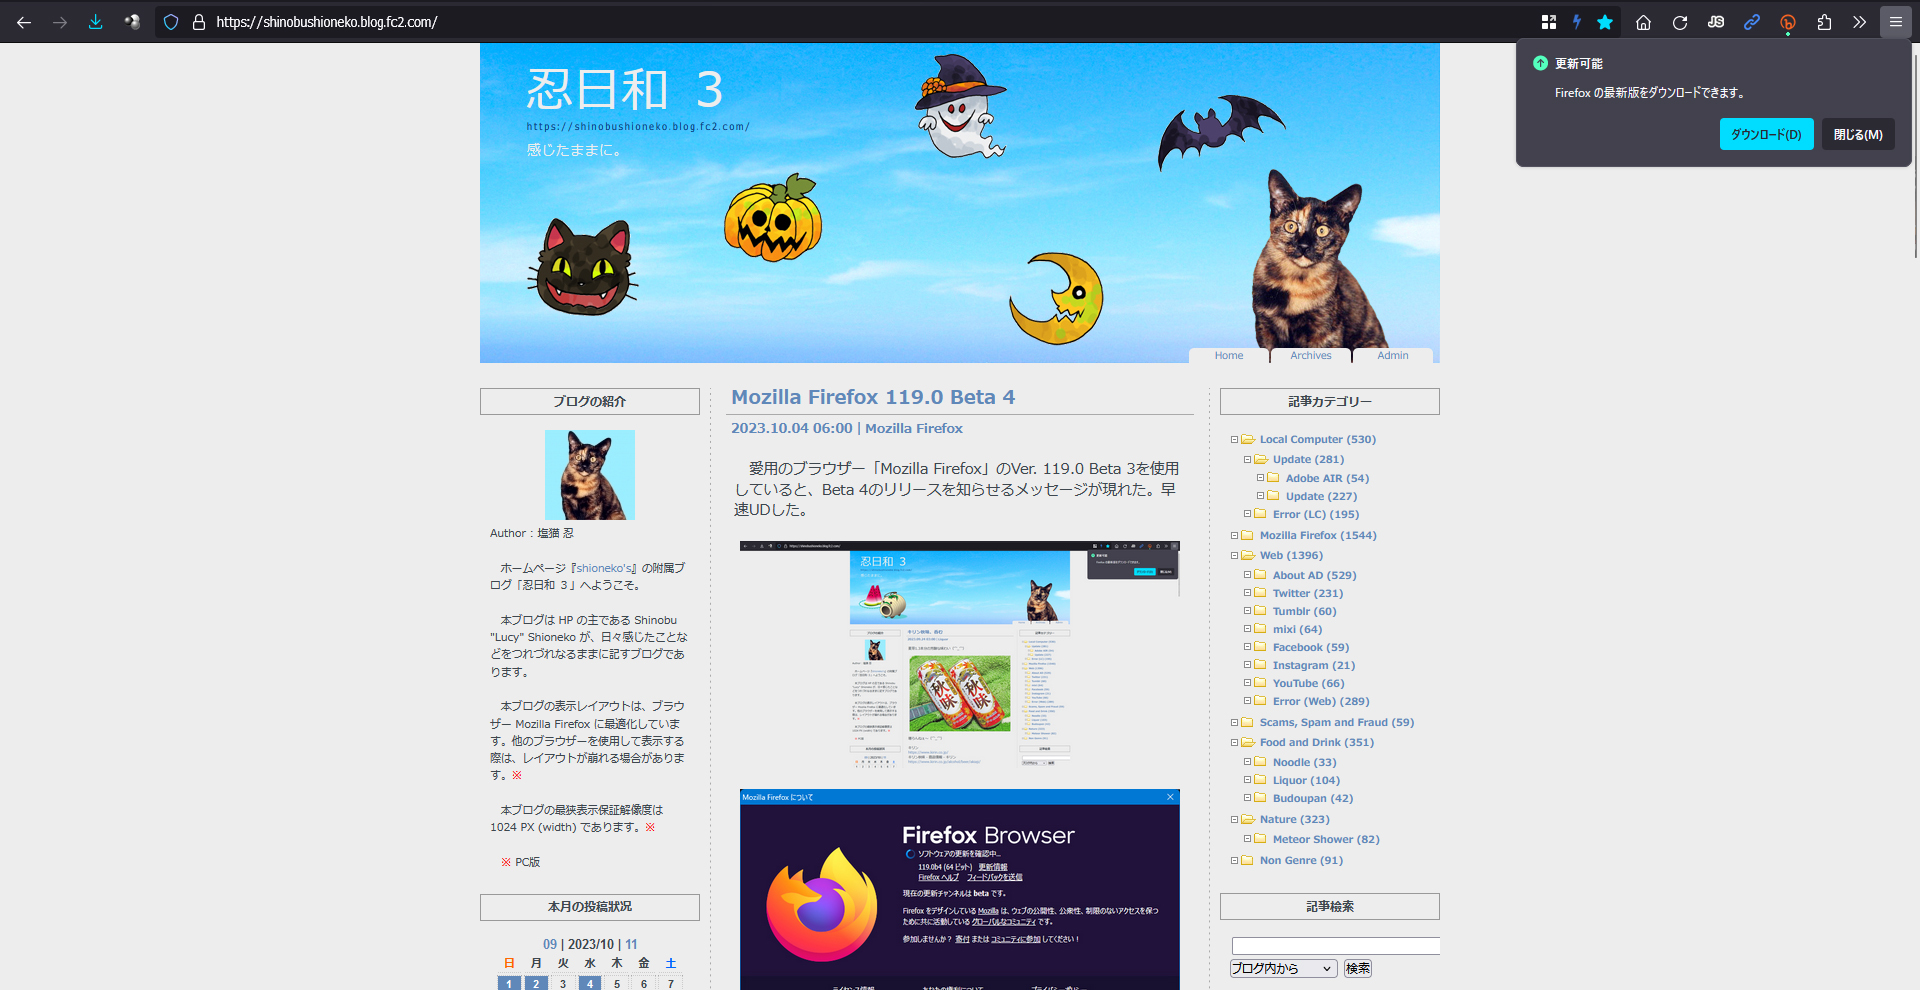 Mozilla Firefox 119.0 Beta 5